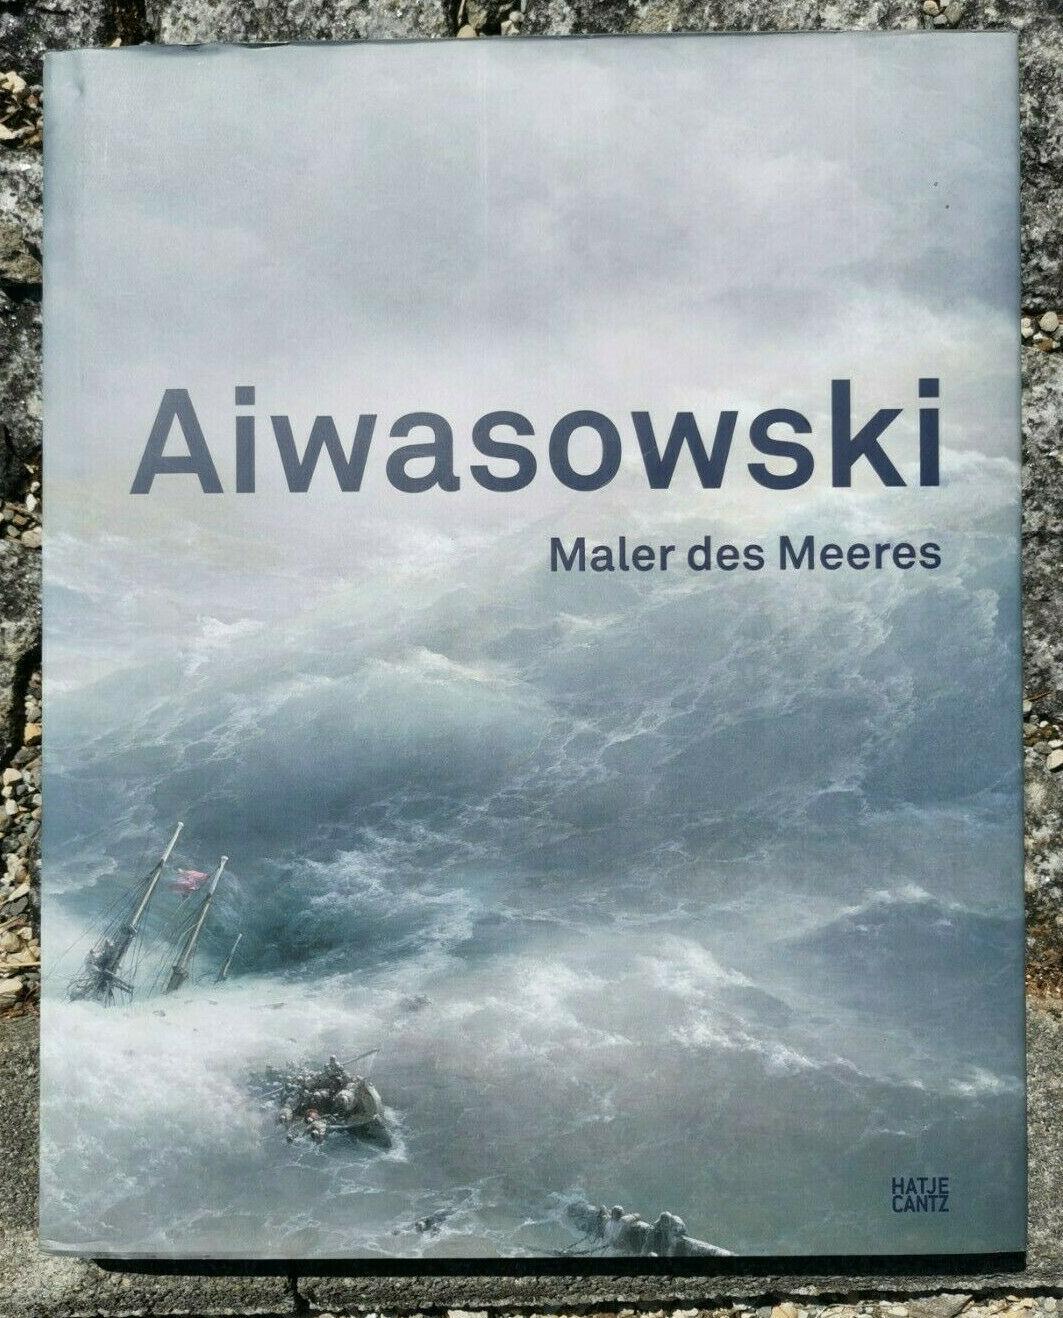 Aiwasowski: Maler des Meeres [hardcover, 2011]